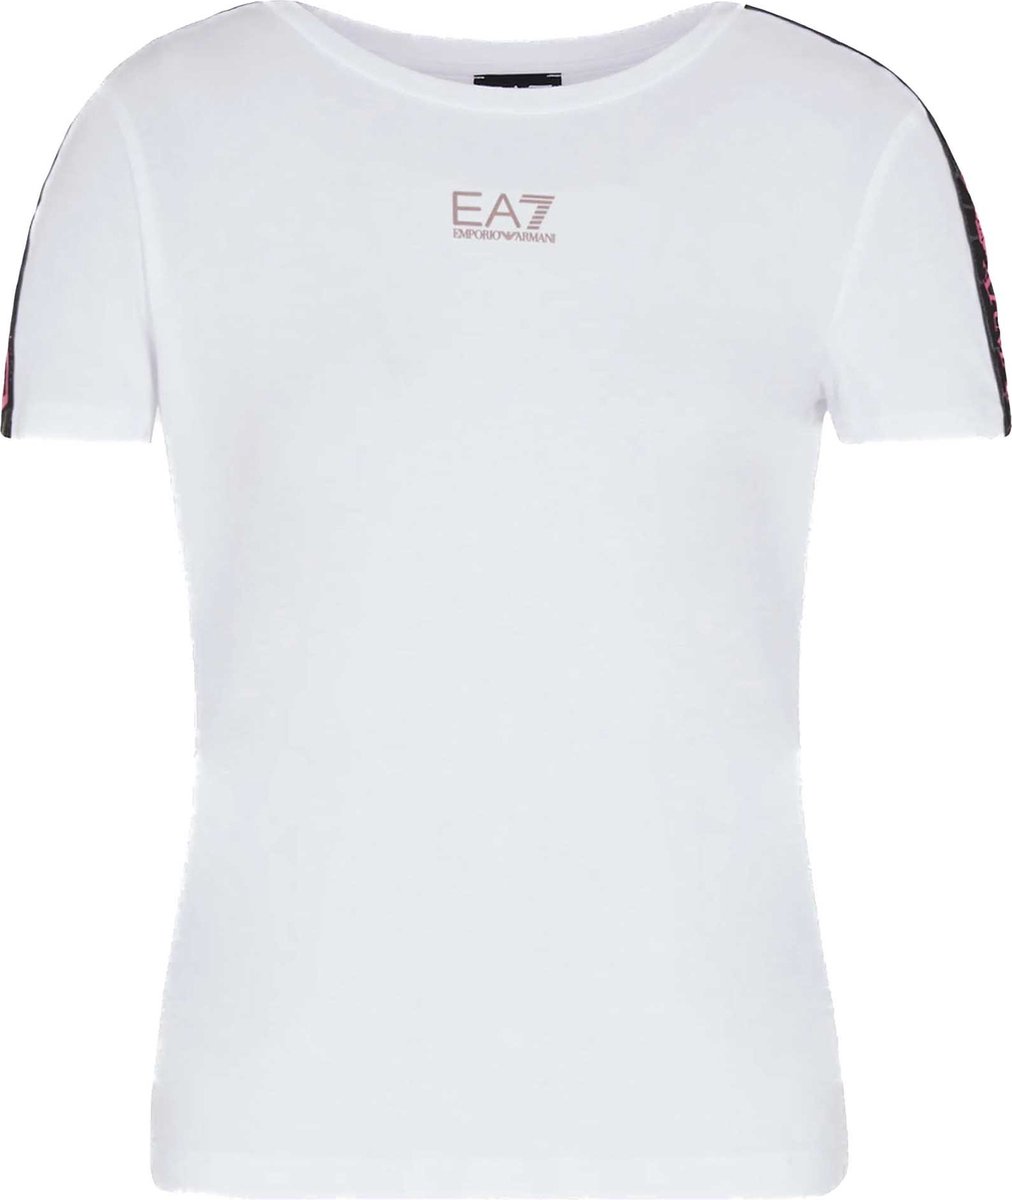 T-Shirt Emporio Armani Ea7 - Sportwear - Vrouwen